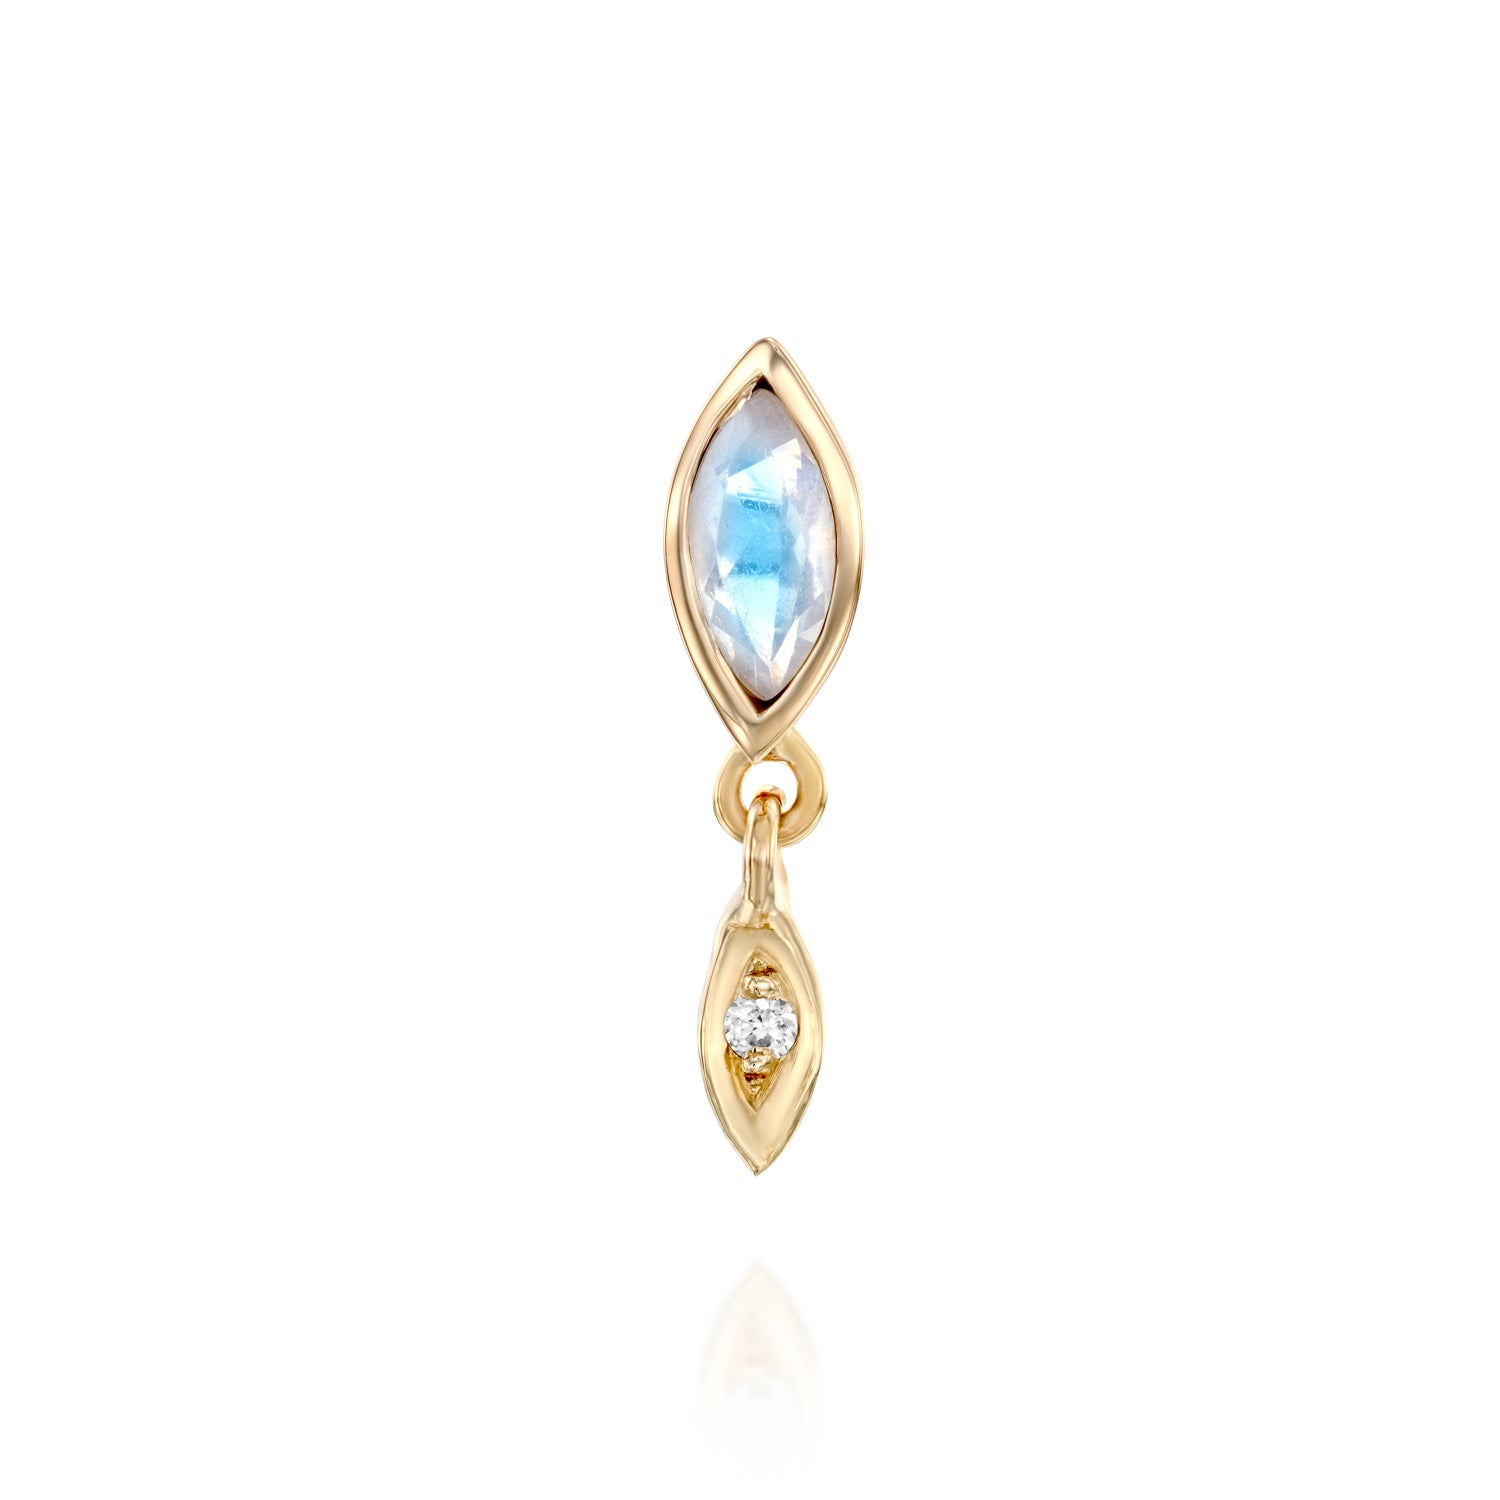 Chandra Earring &amp; Moonstone - one of a kind - Danielle Gerber Freedom Jewelry